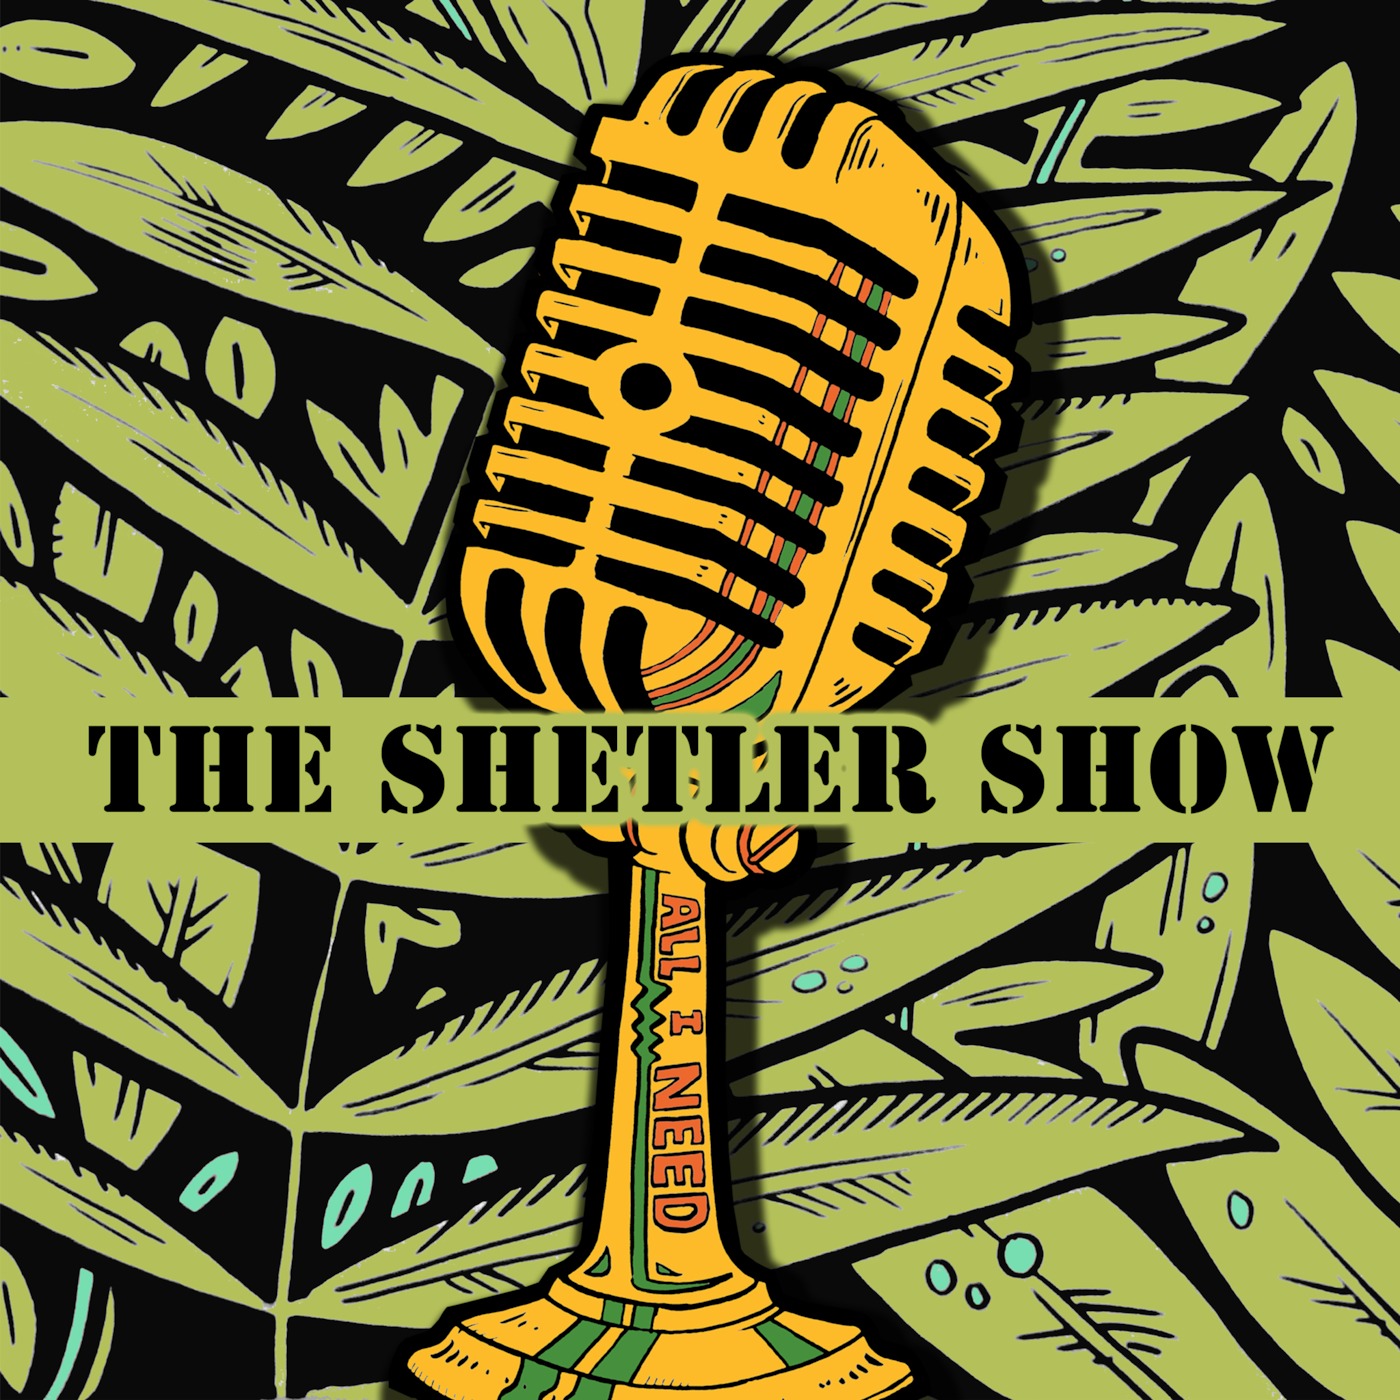 Episode 197: The Shetler Show Live - ALL I NEED SKATE PODCAST